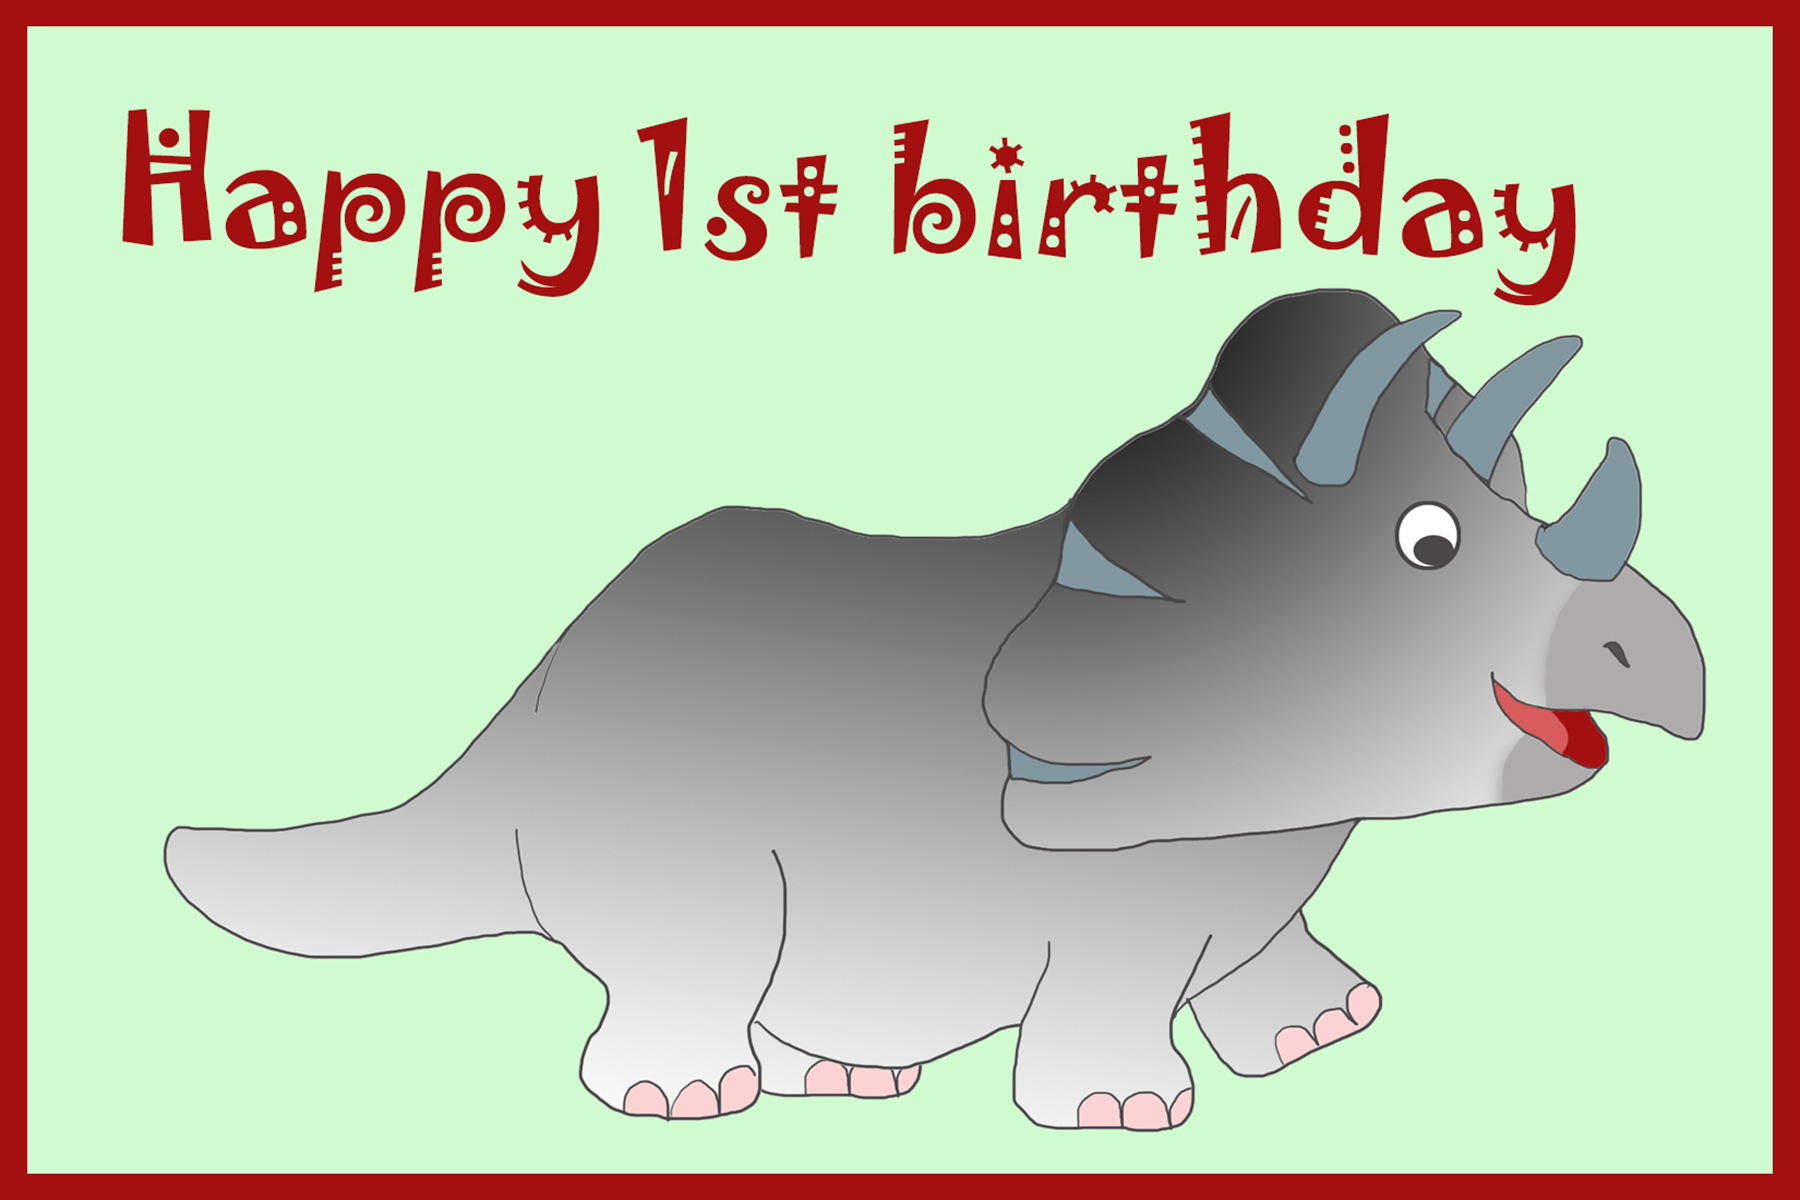 katmosaurus birthday card 1st birthday